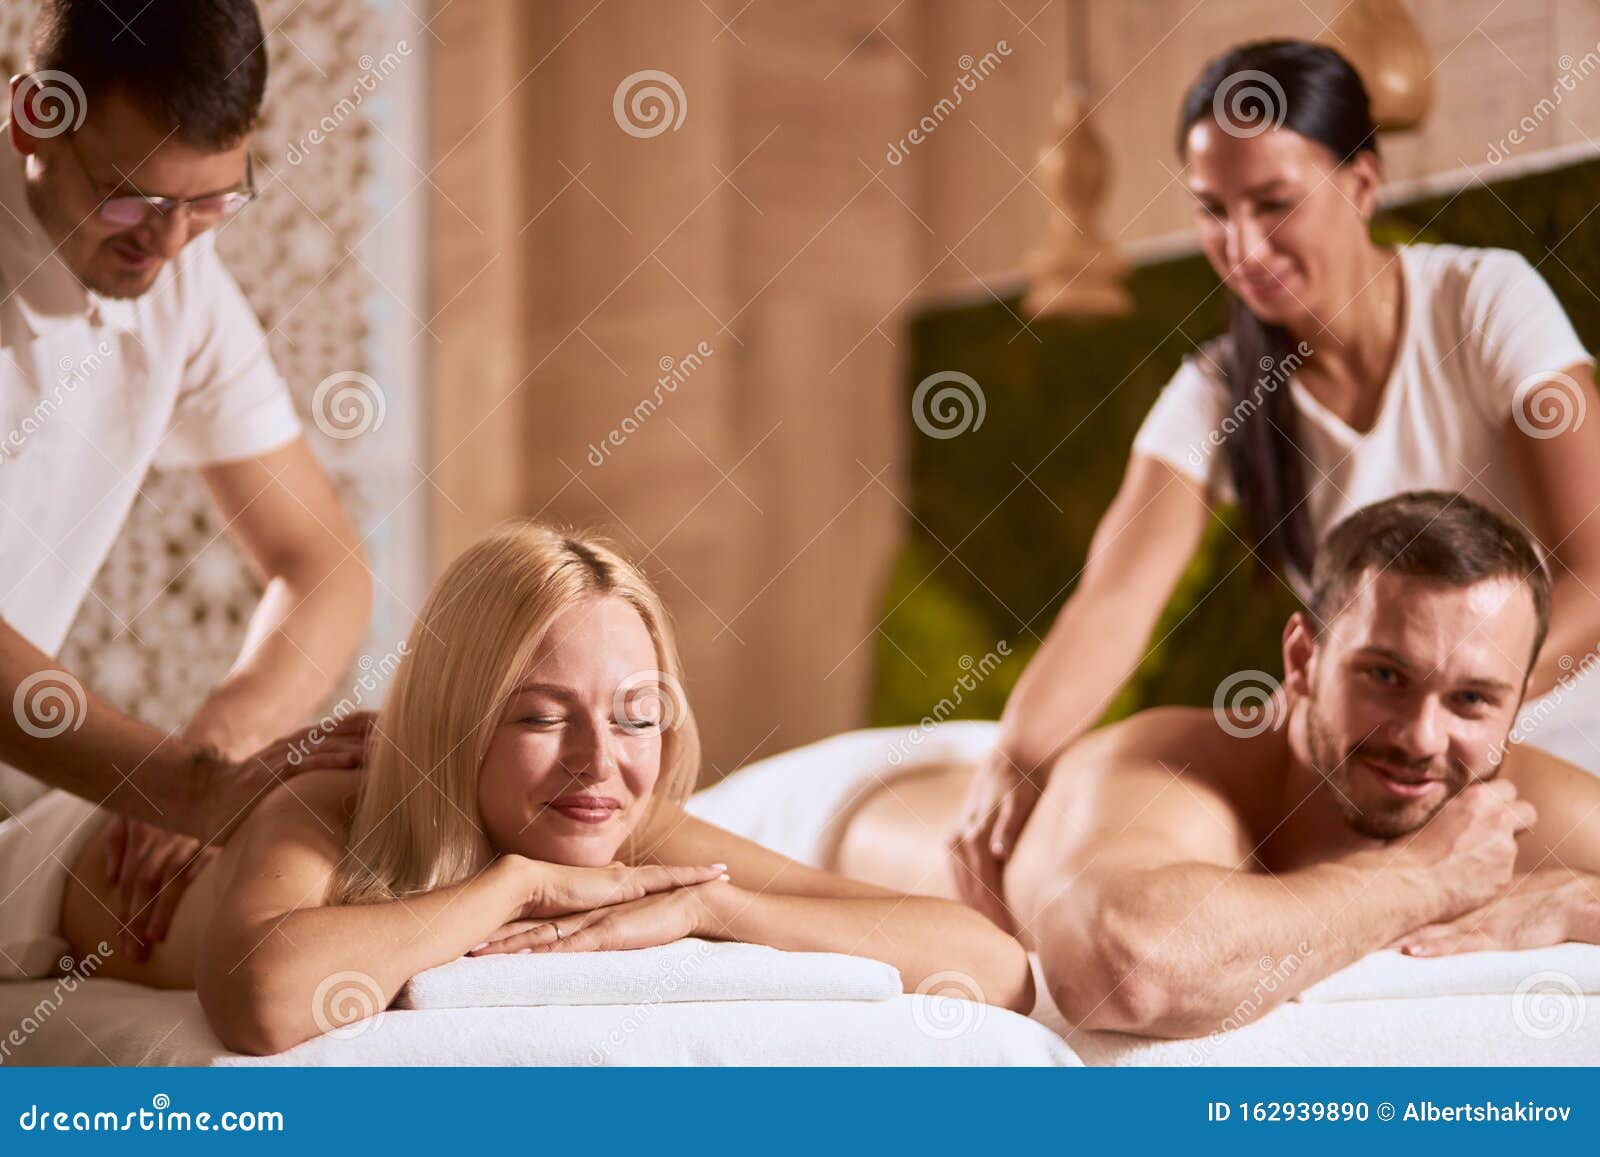 Couple Massage